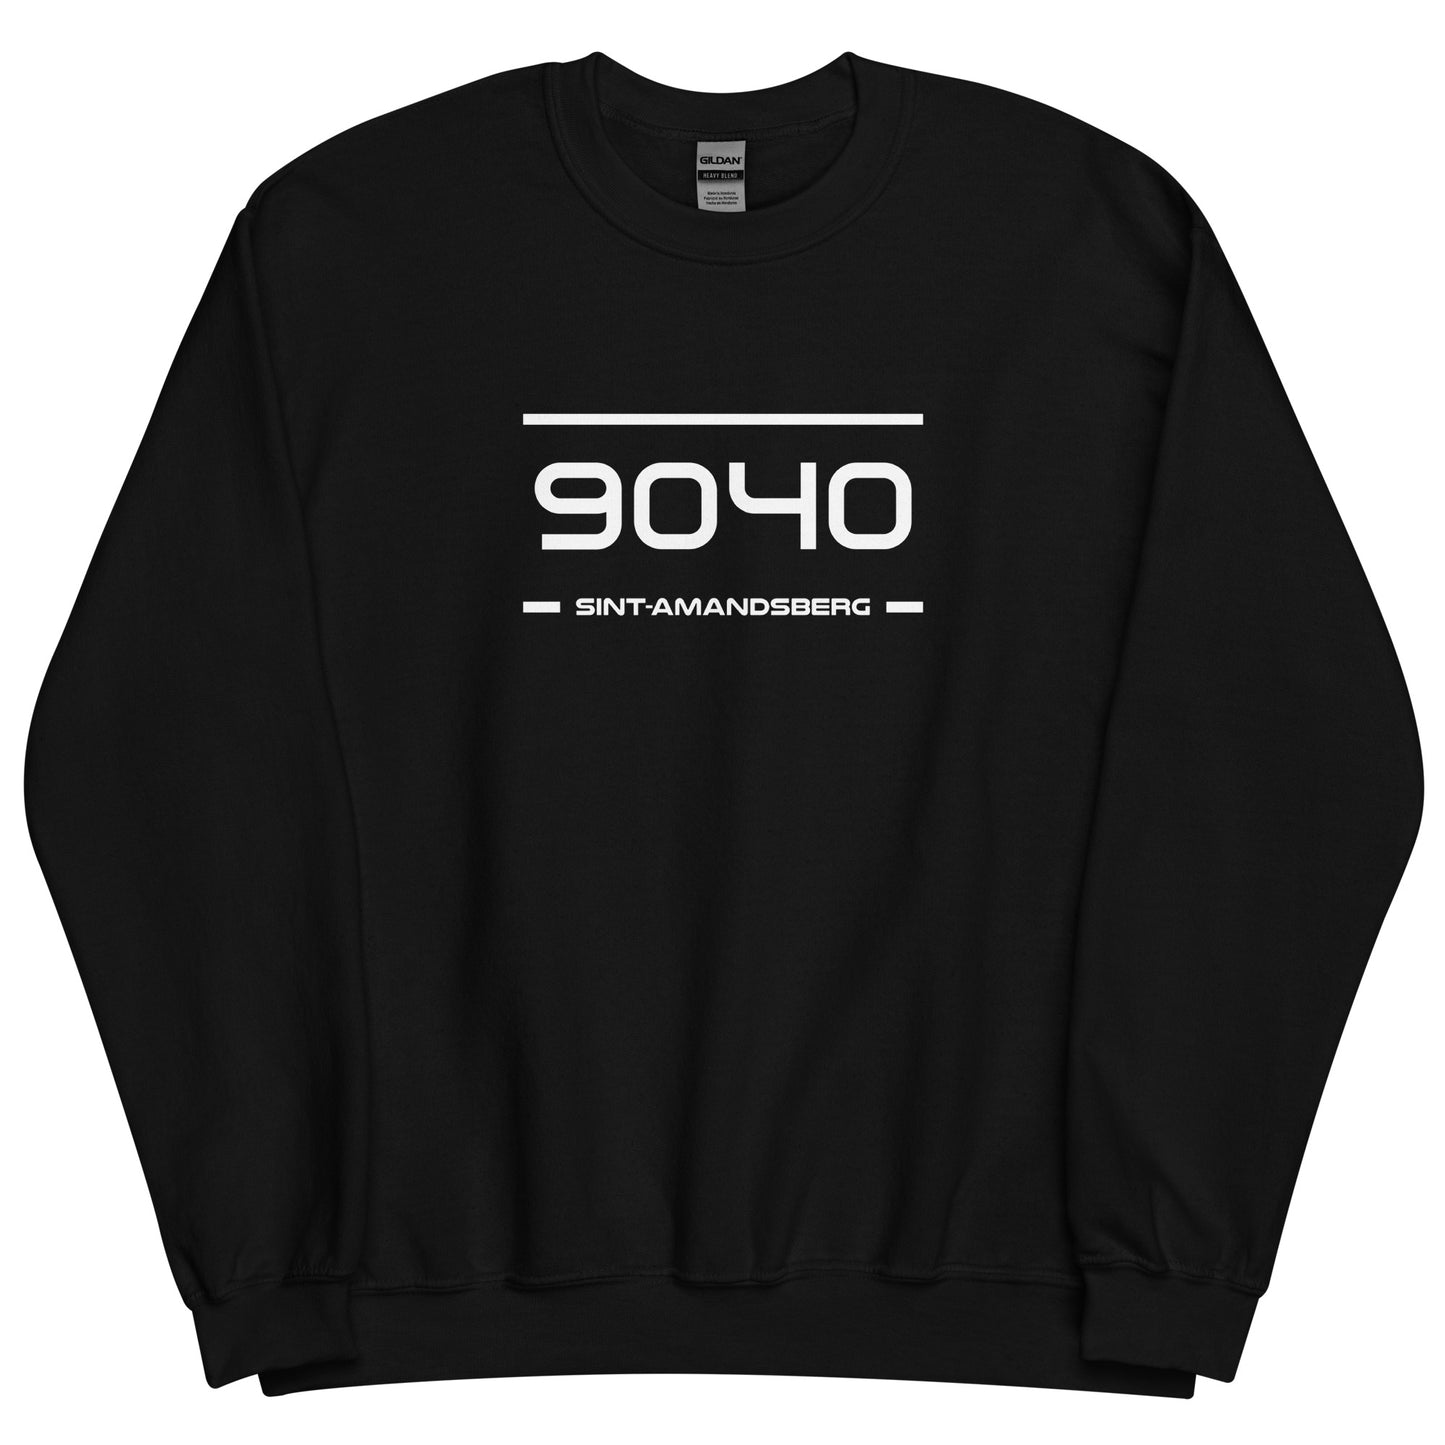 Sweater - 9040 - Sint-Amandsberg (M/V)